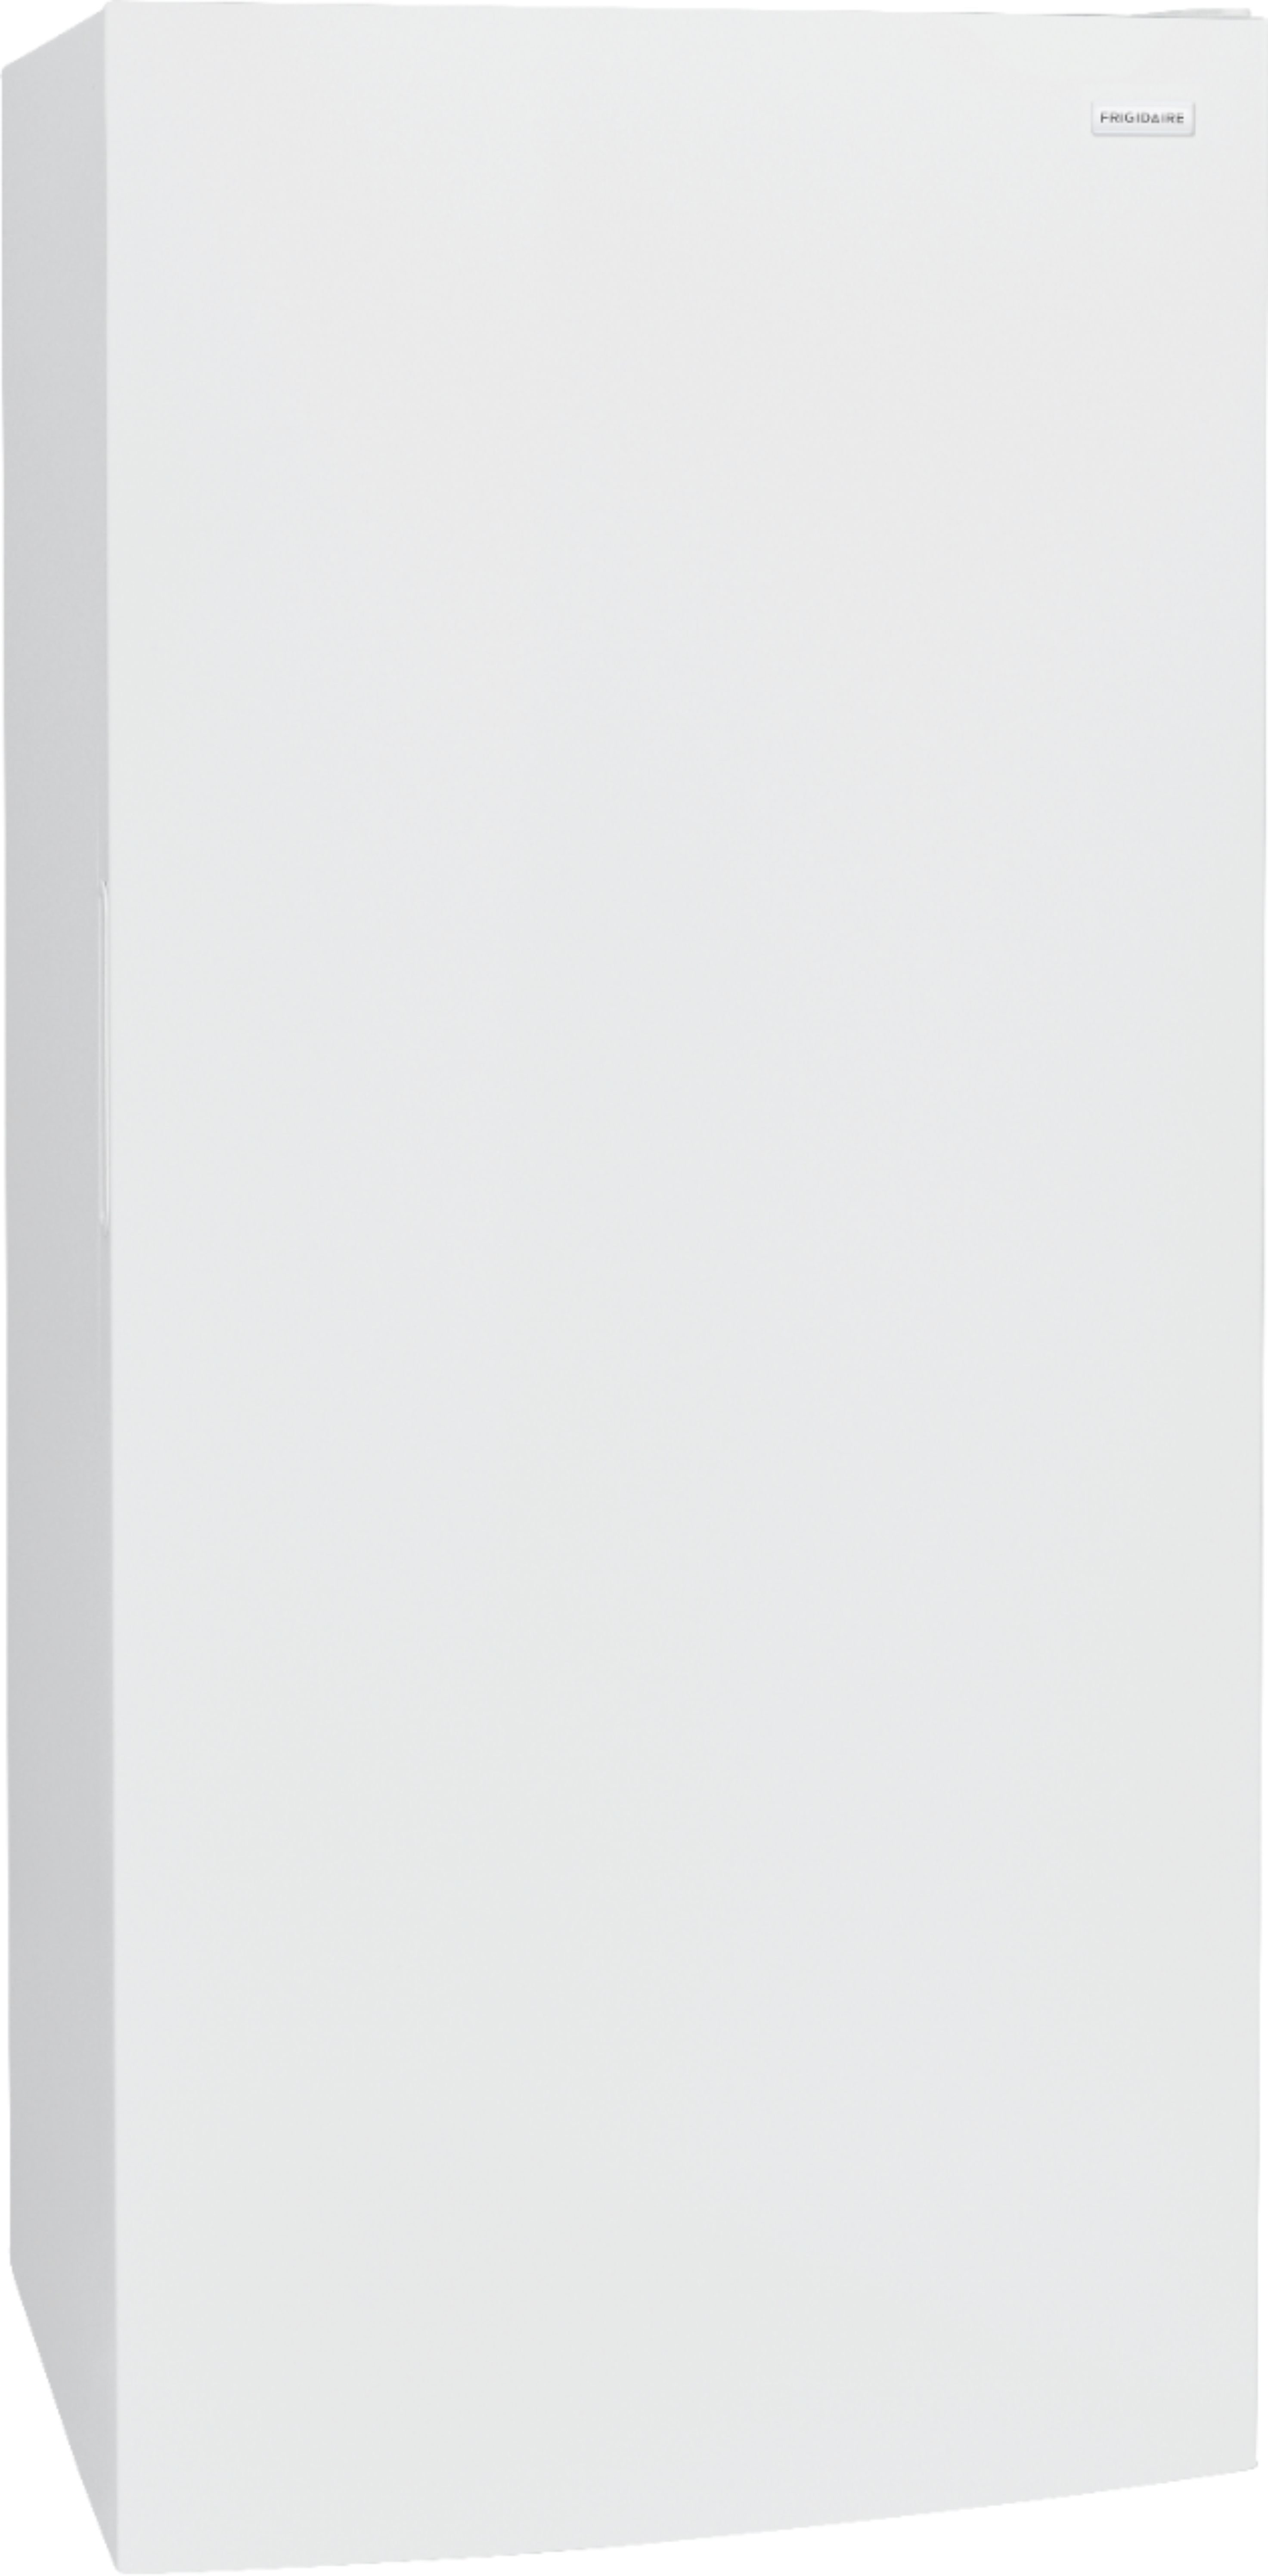 Angle View: JennAir - 17.0 Cu. Ft. Upright Wi-Fi Freezer - Custom Panel Ready